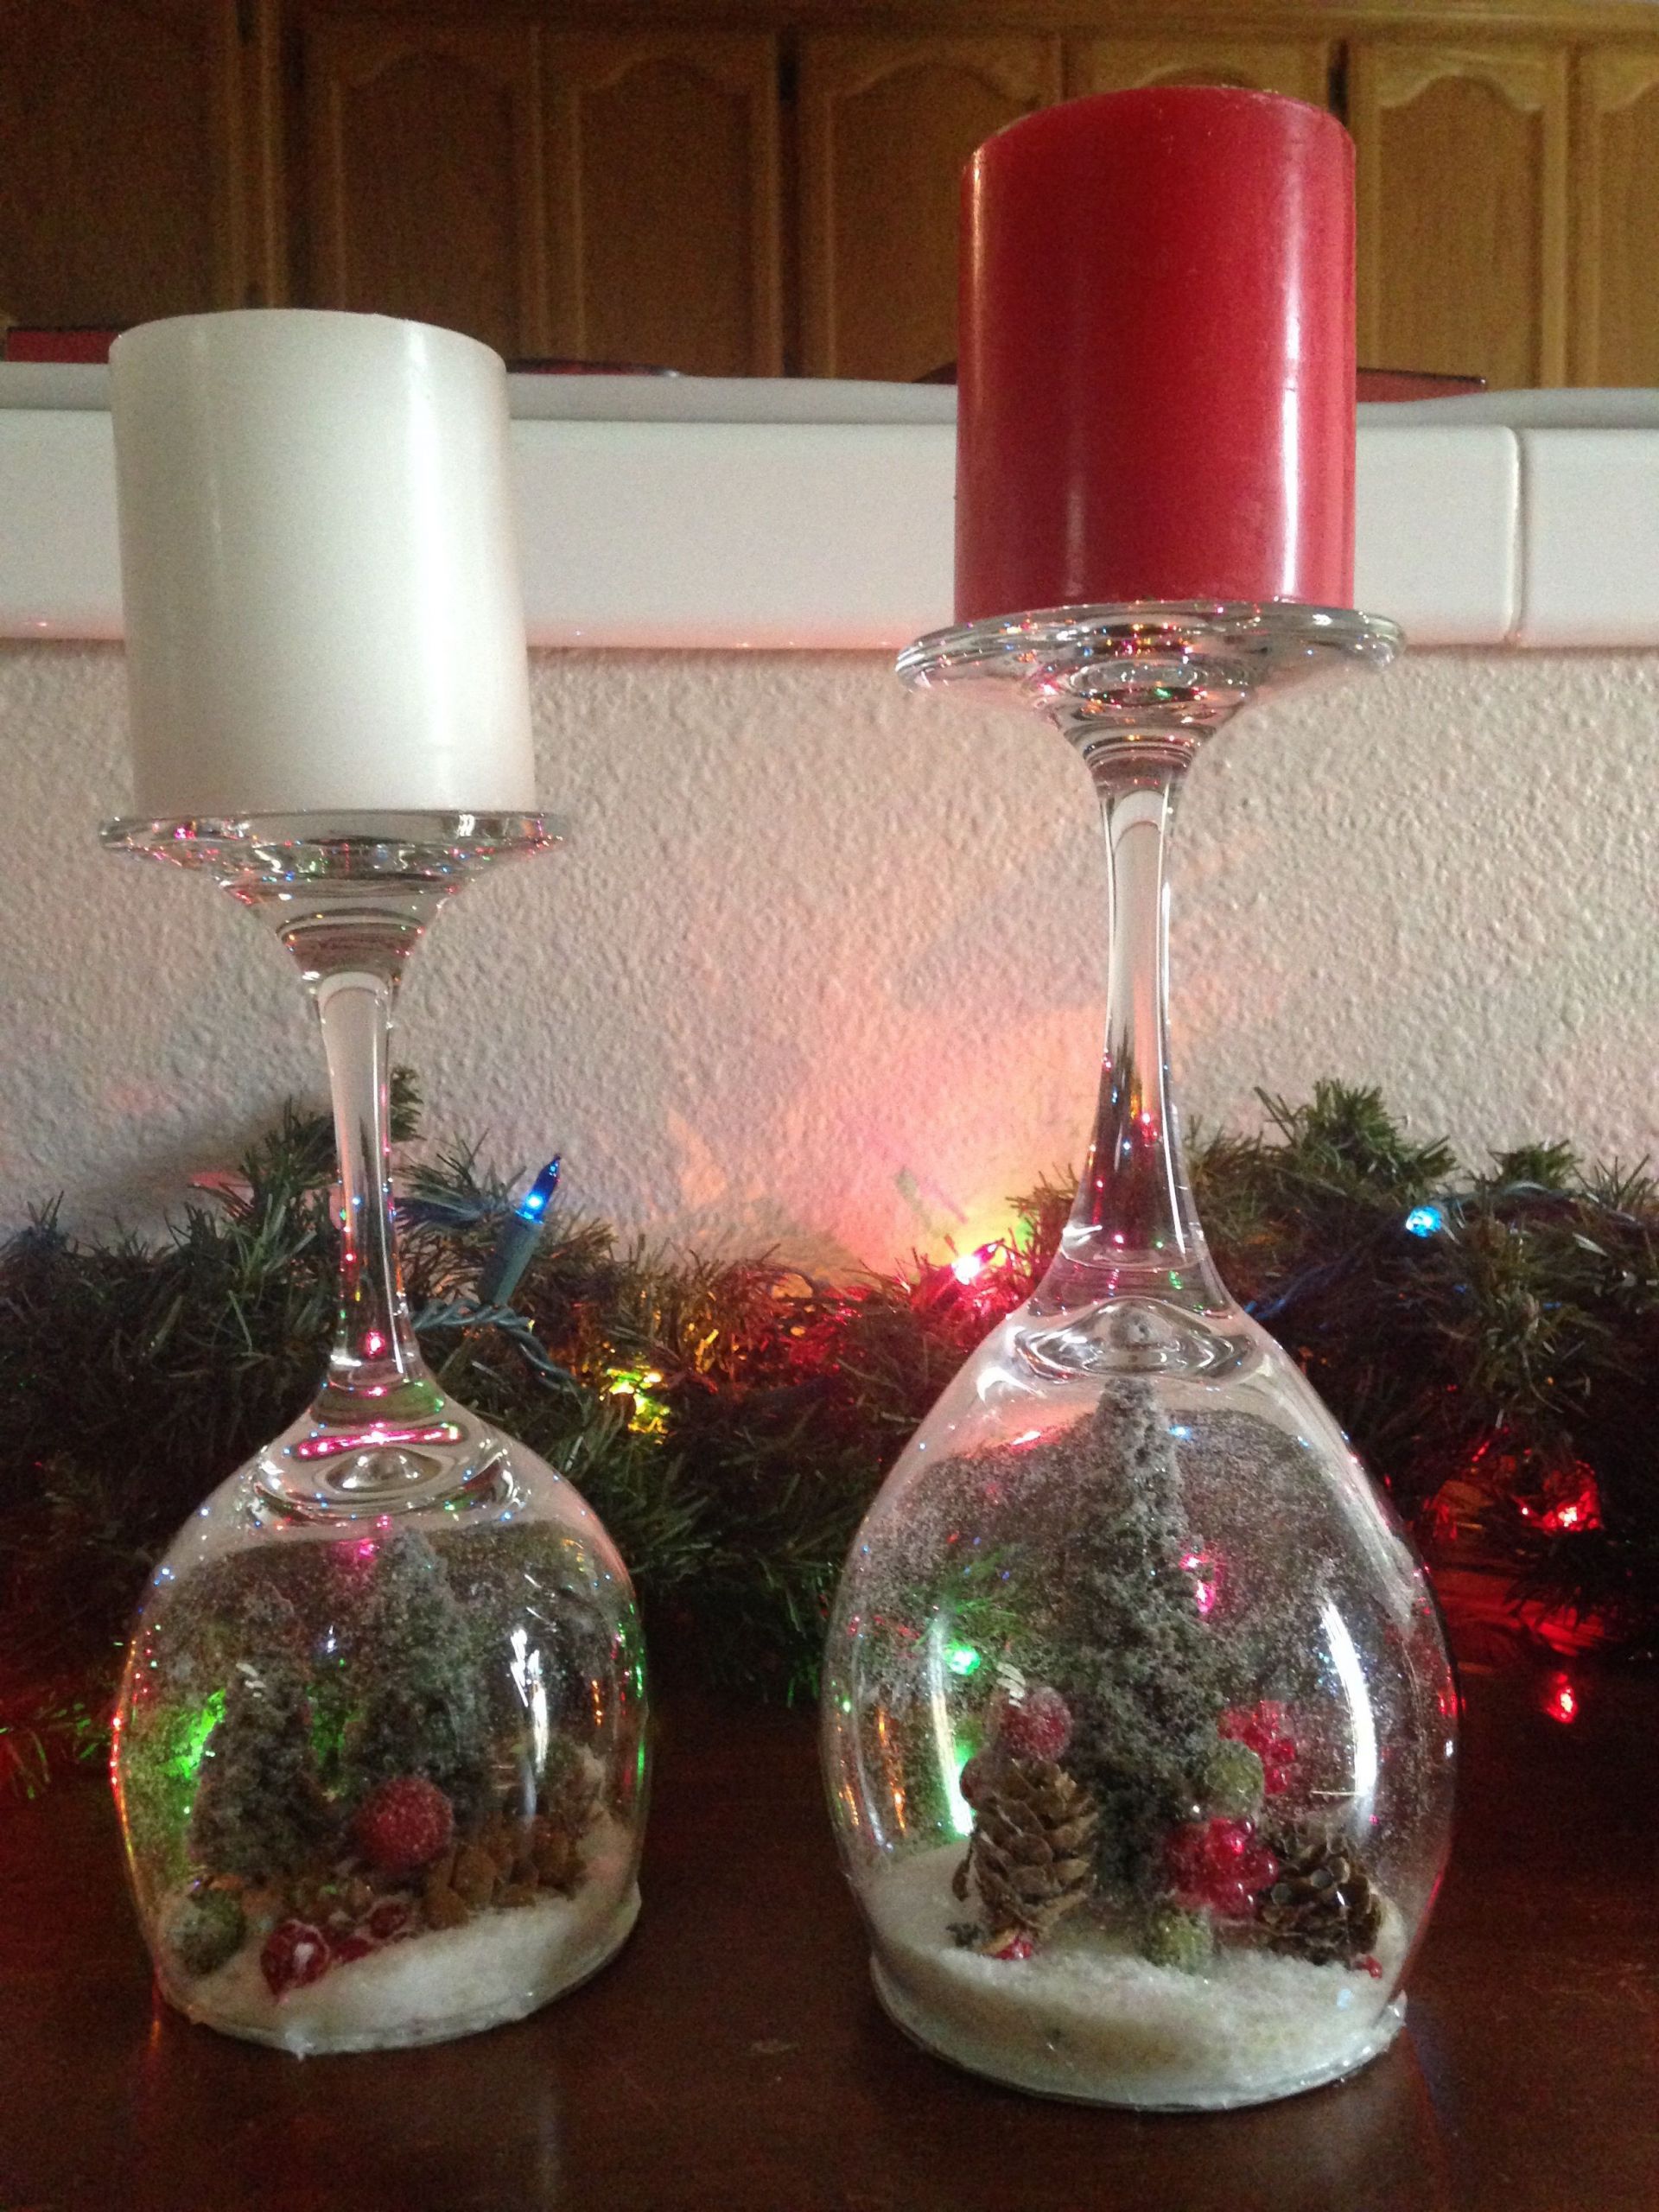 DIY Wine Glass Decorations
 DIY Wine Glass Snow Globes